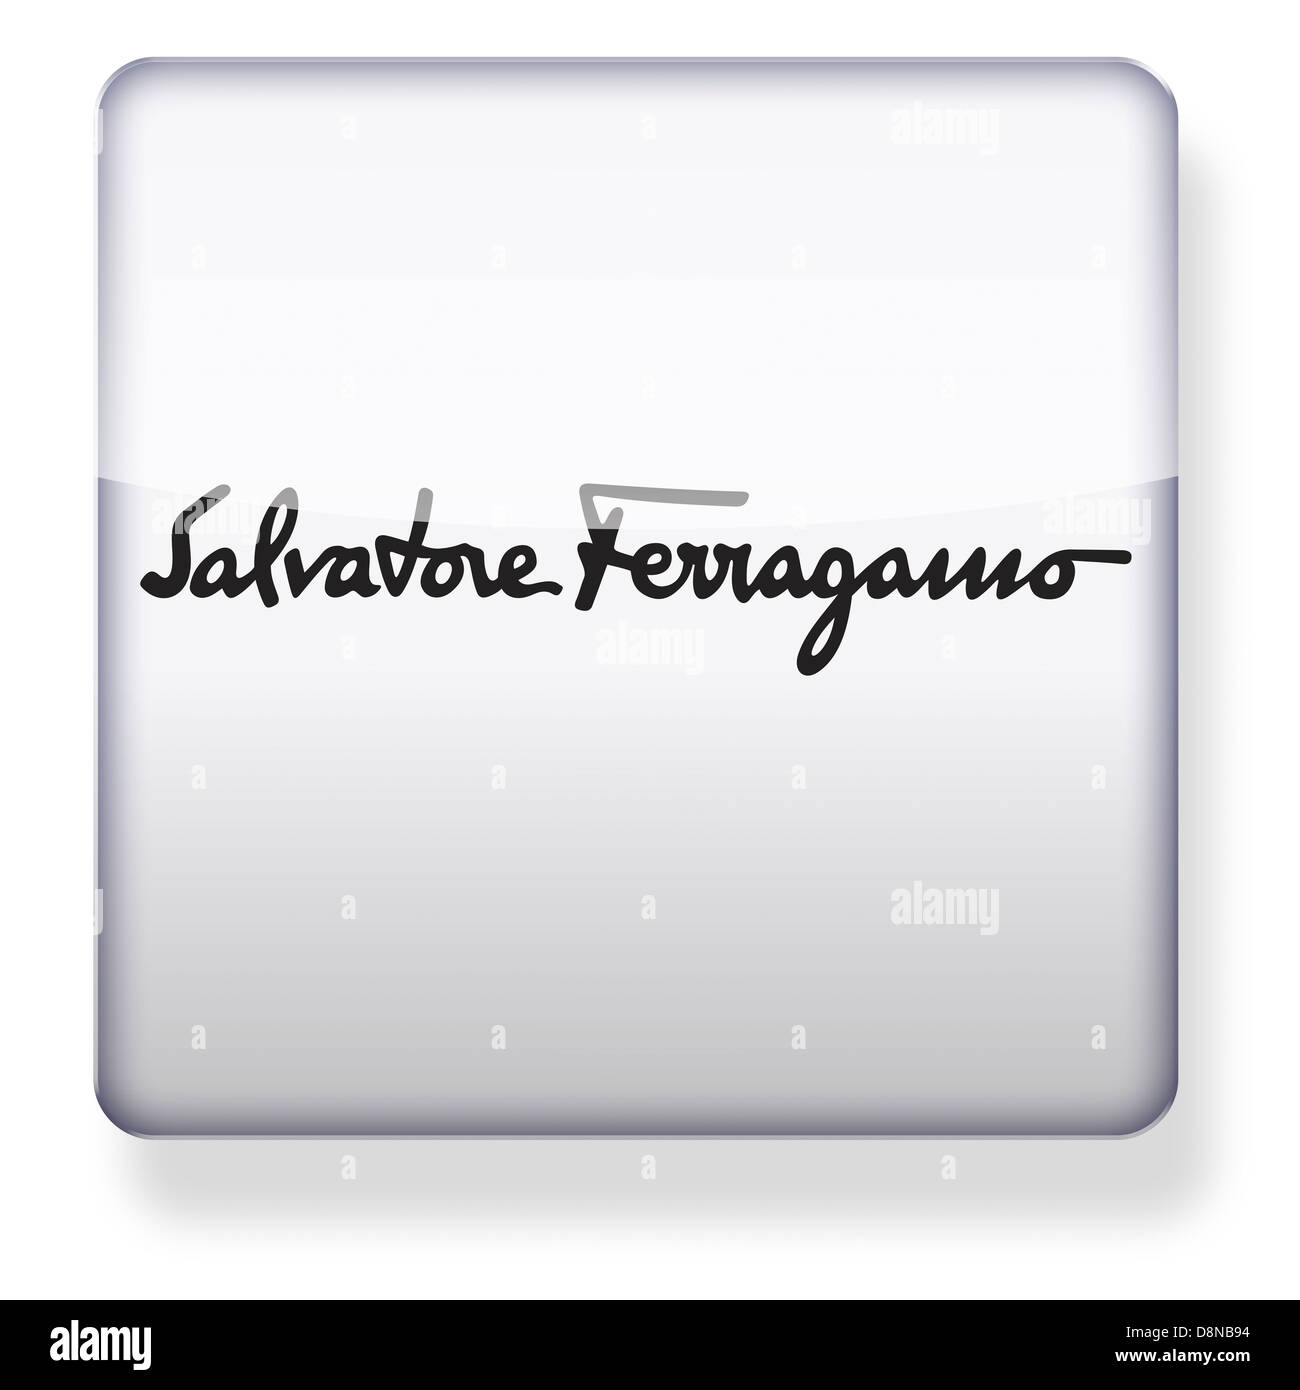 Salvatore Ferragamo logo as an app icon. Clipping path included. Stock Photo